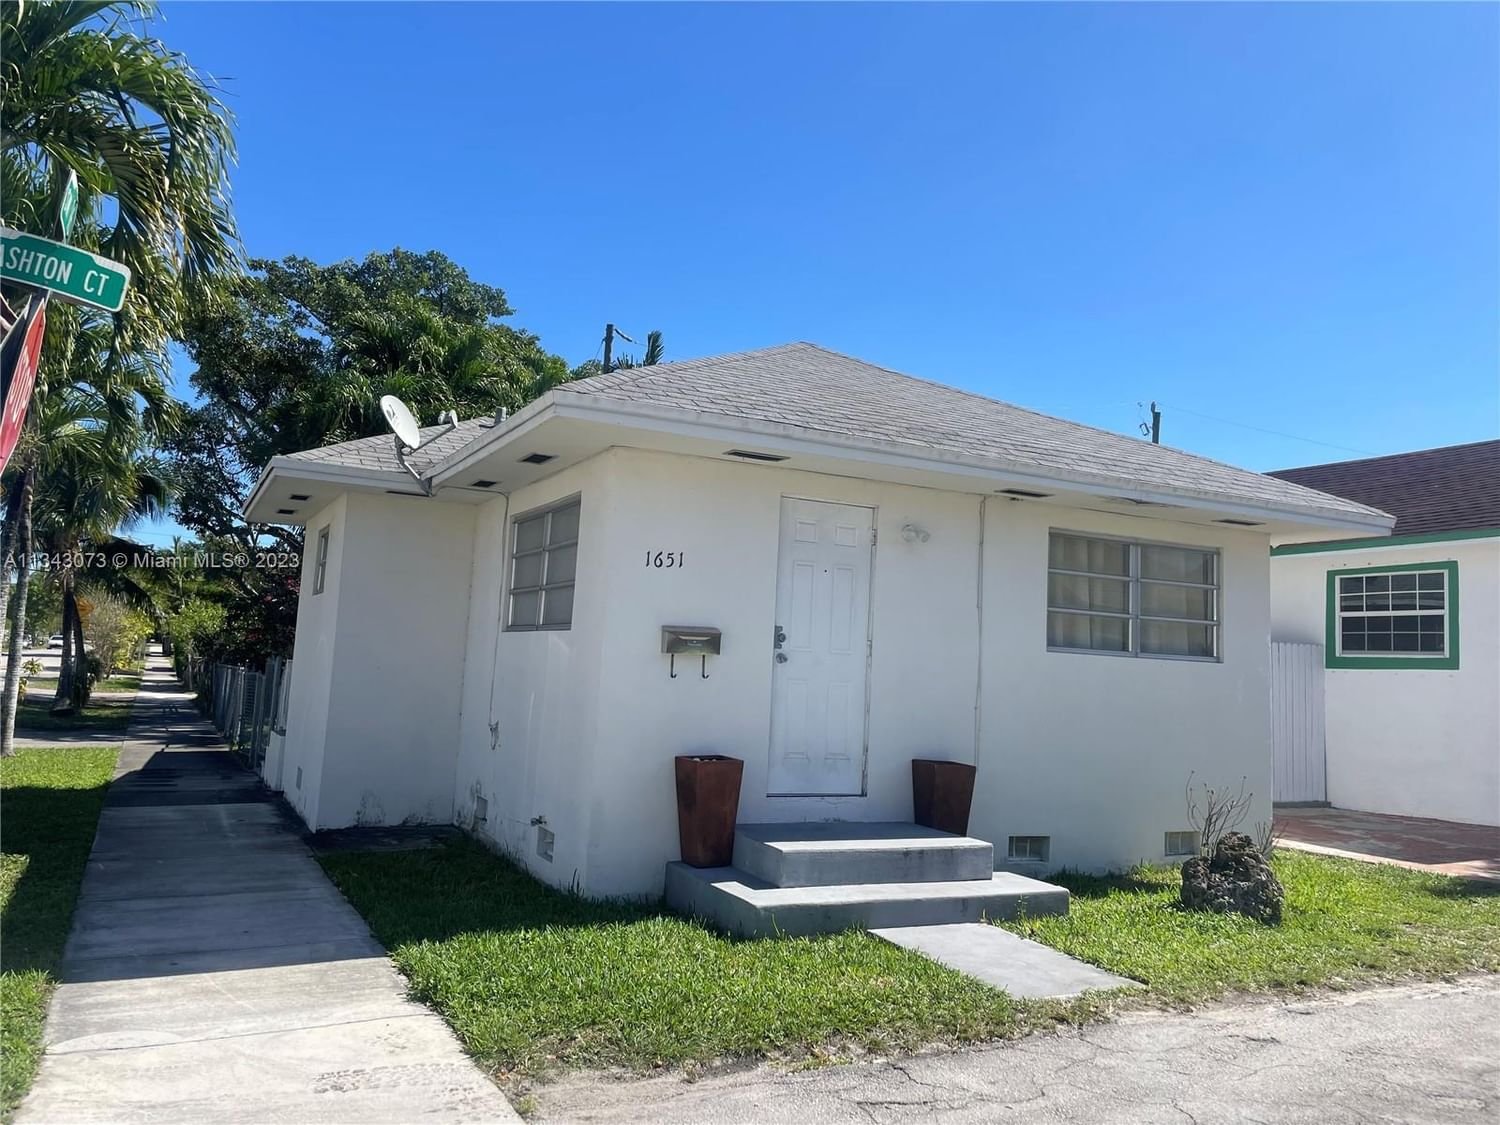 Real estate property located at 1651 Ashton Ct, Miami-Dade County, Miami, FL